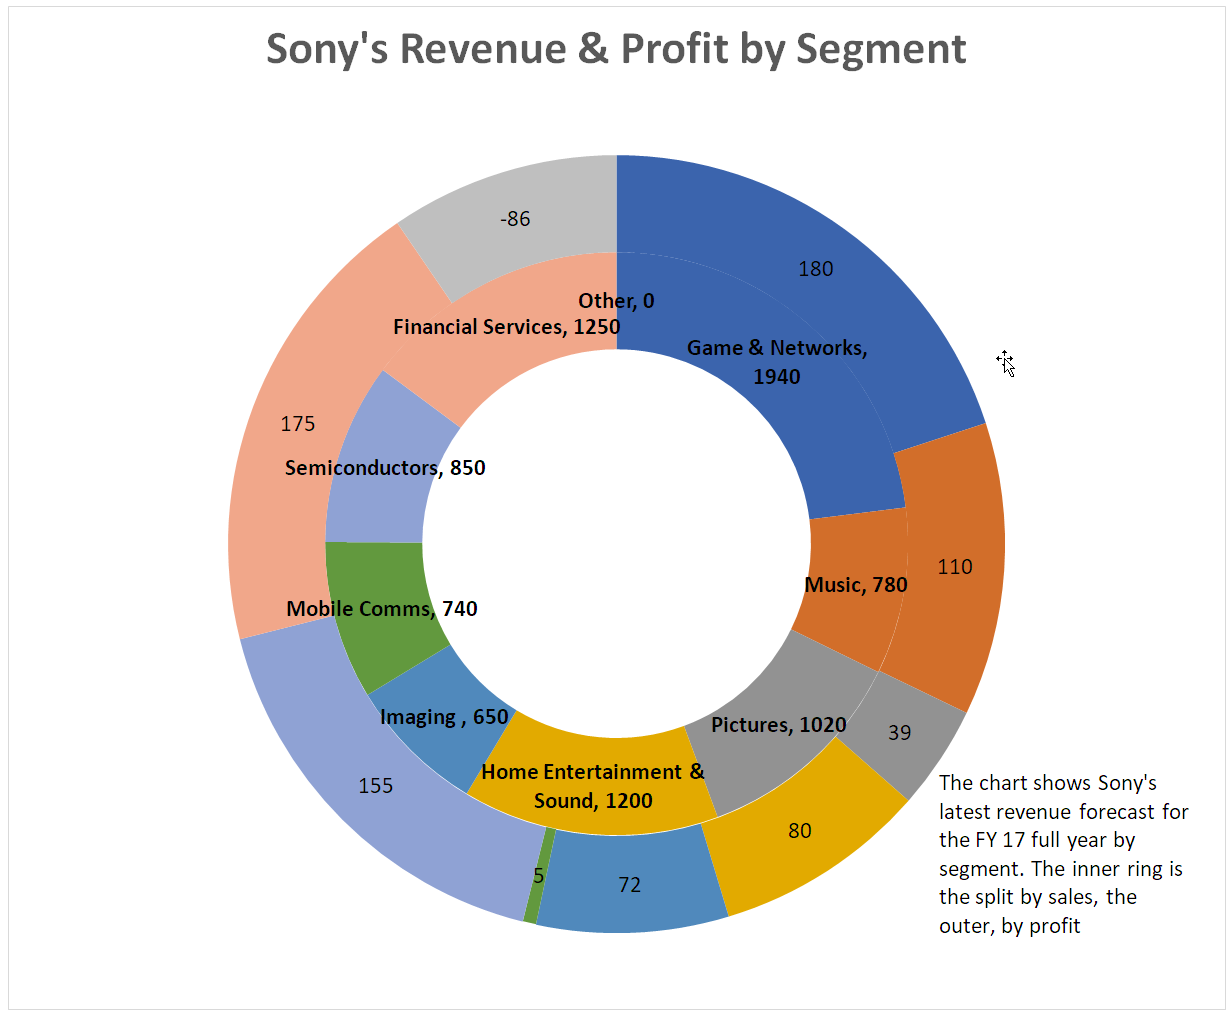 Sonys revenue by segment